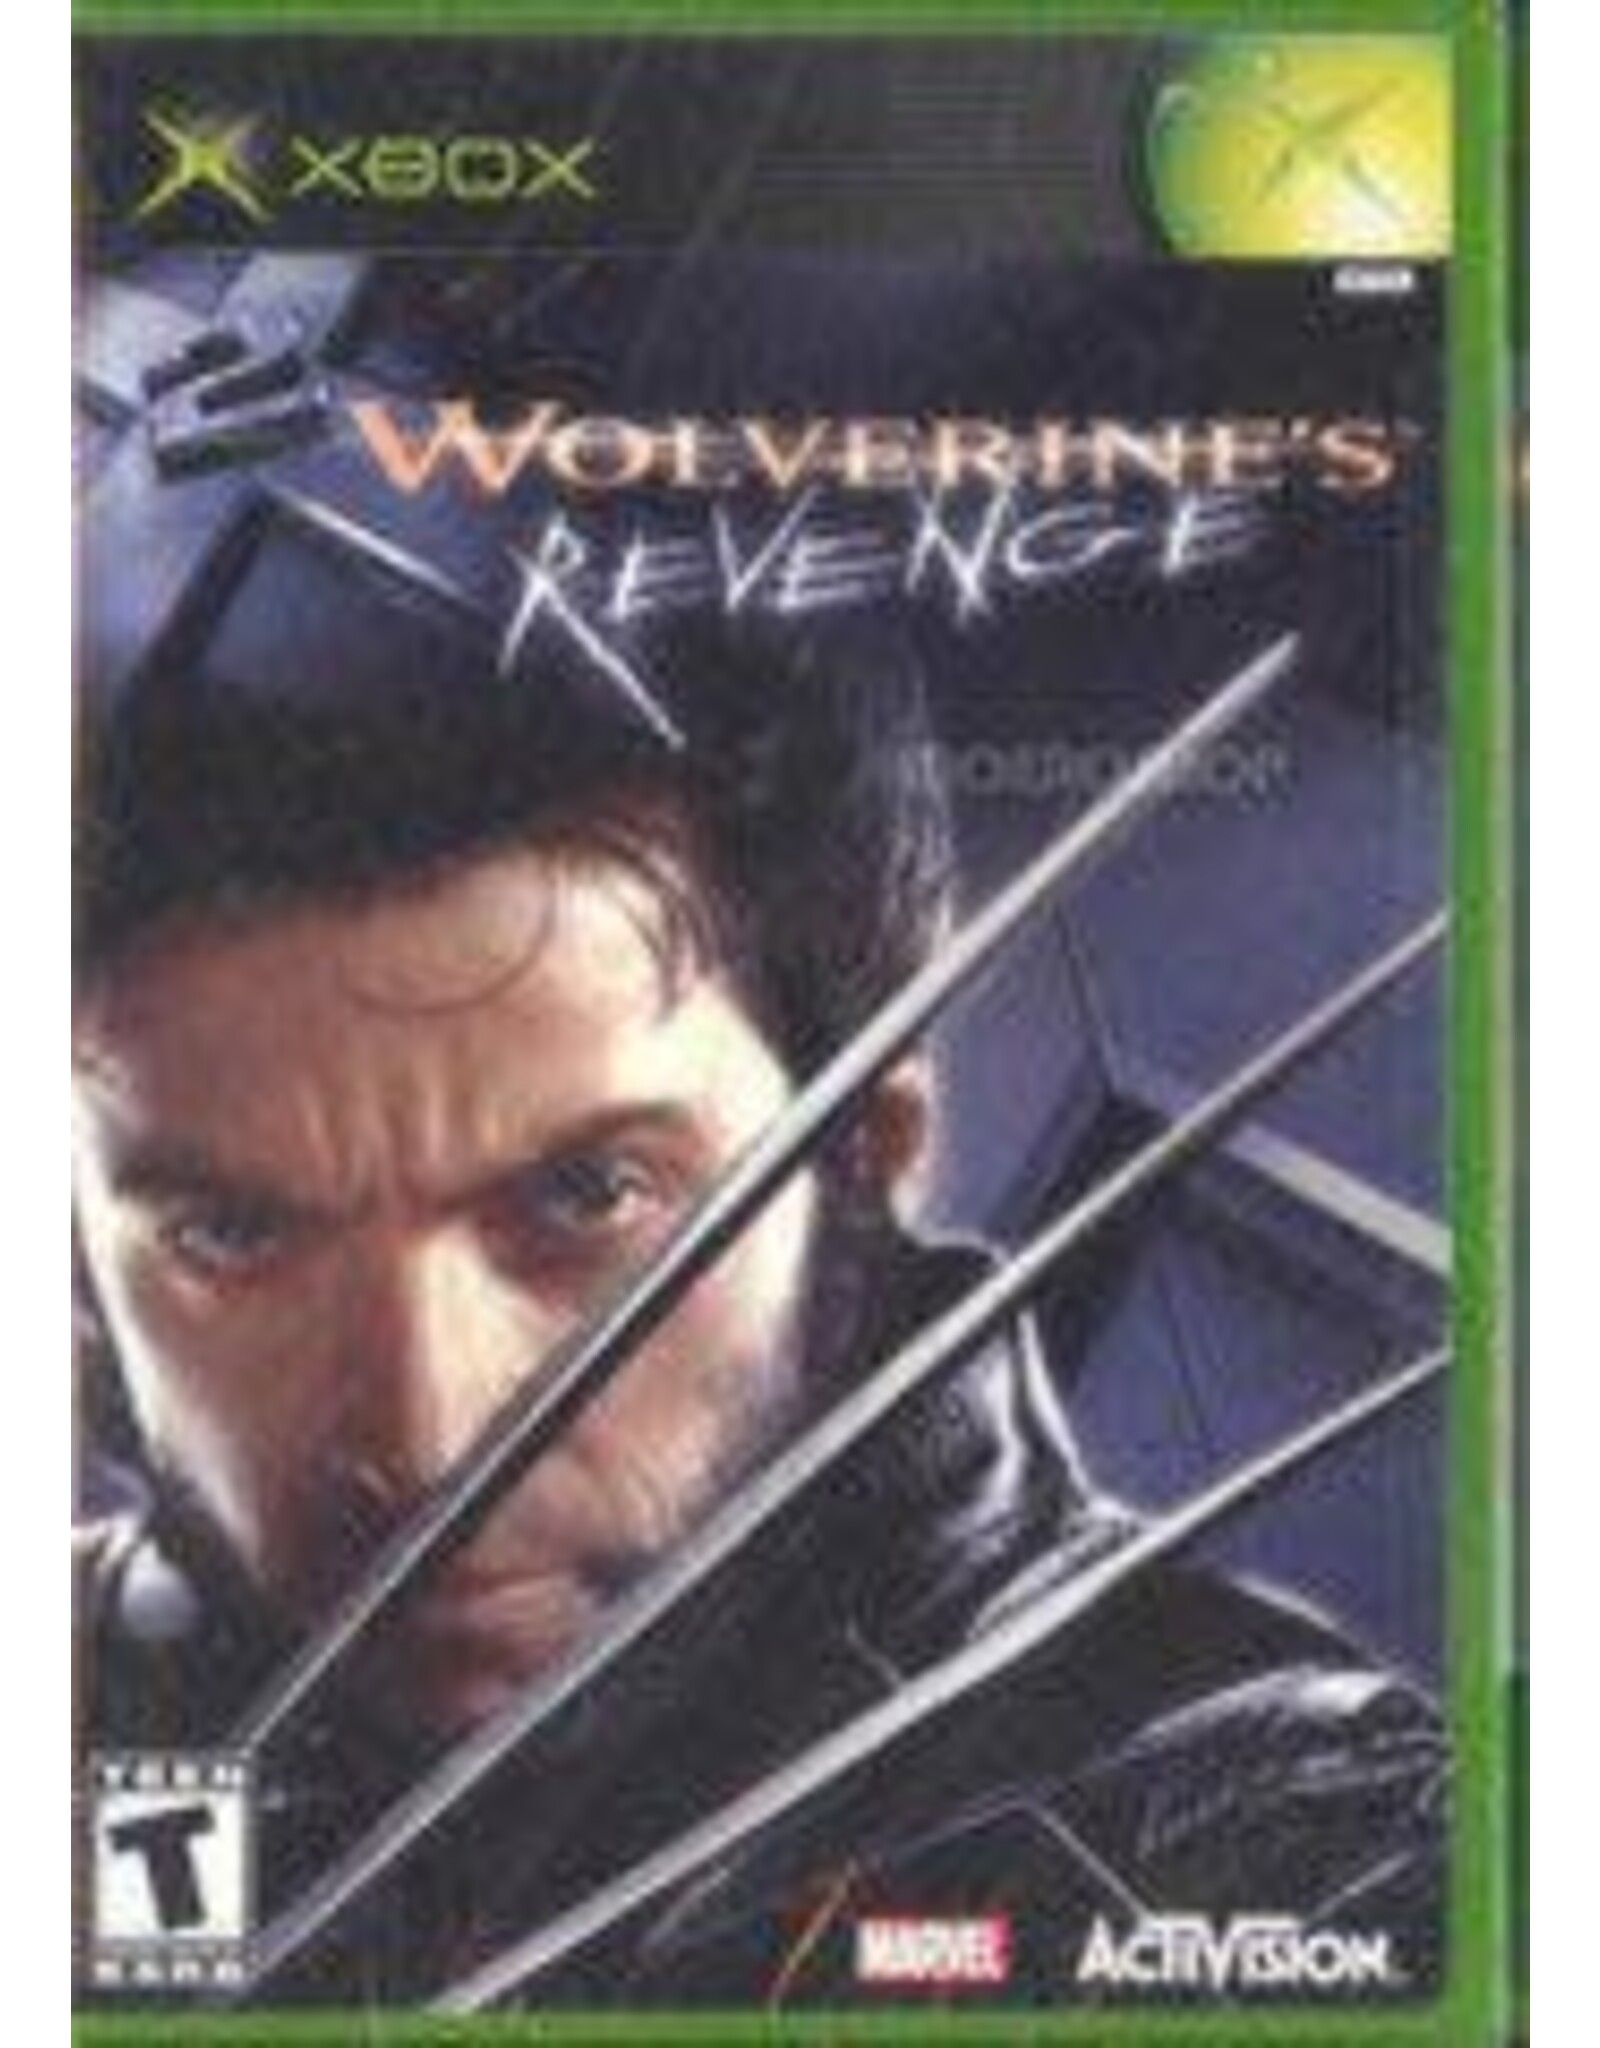 Xbox X-men Wolverines Revenge (No Manual)